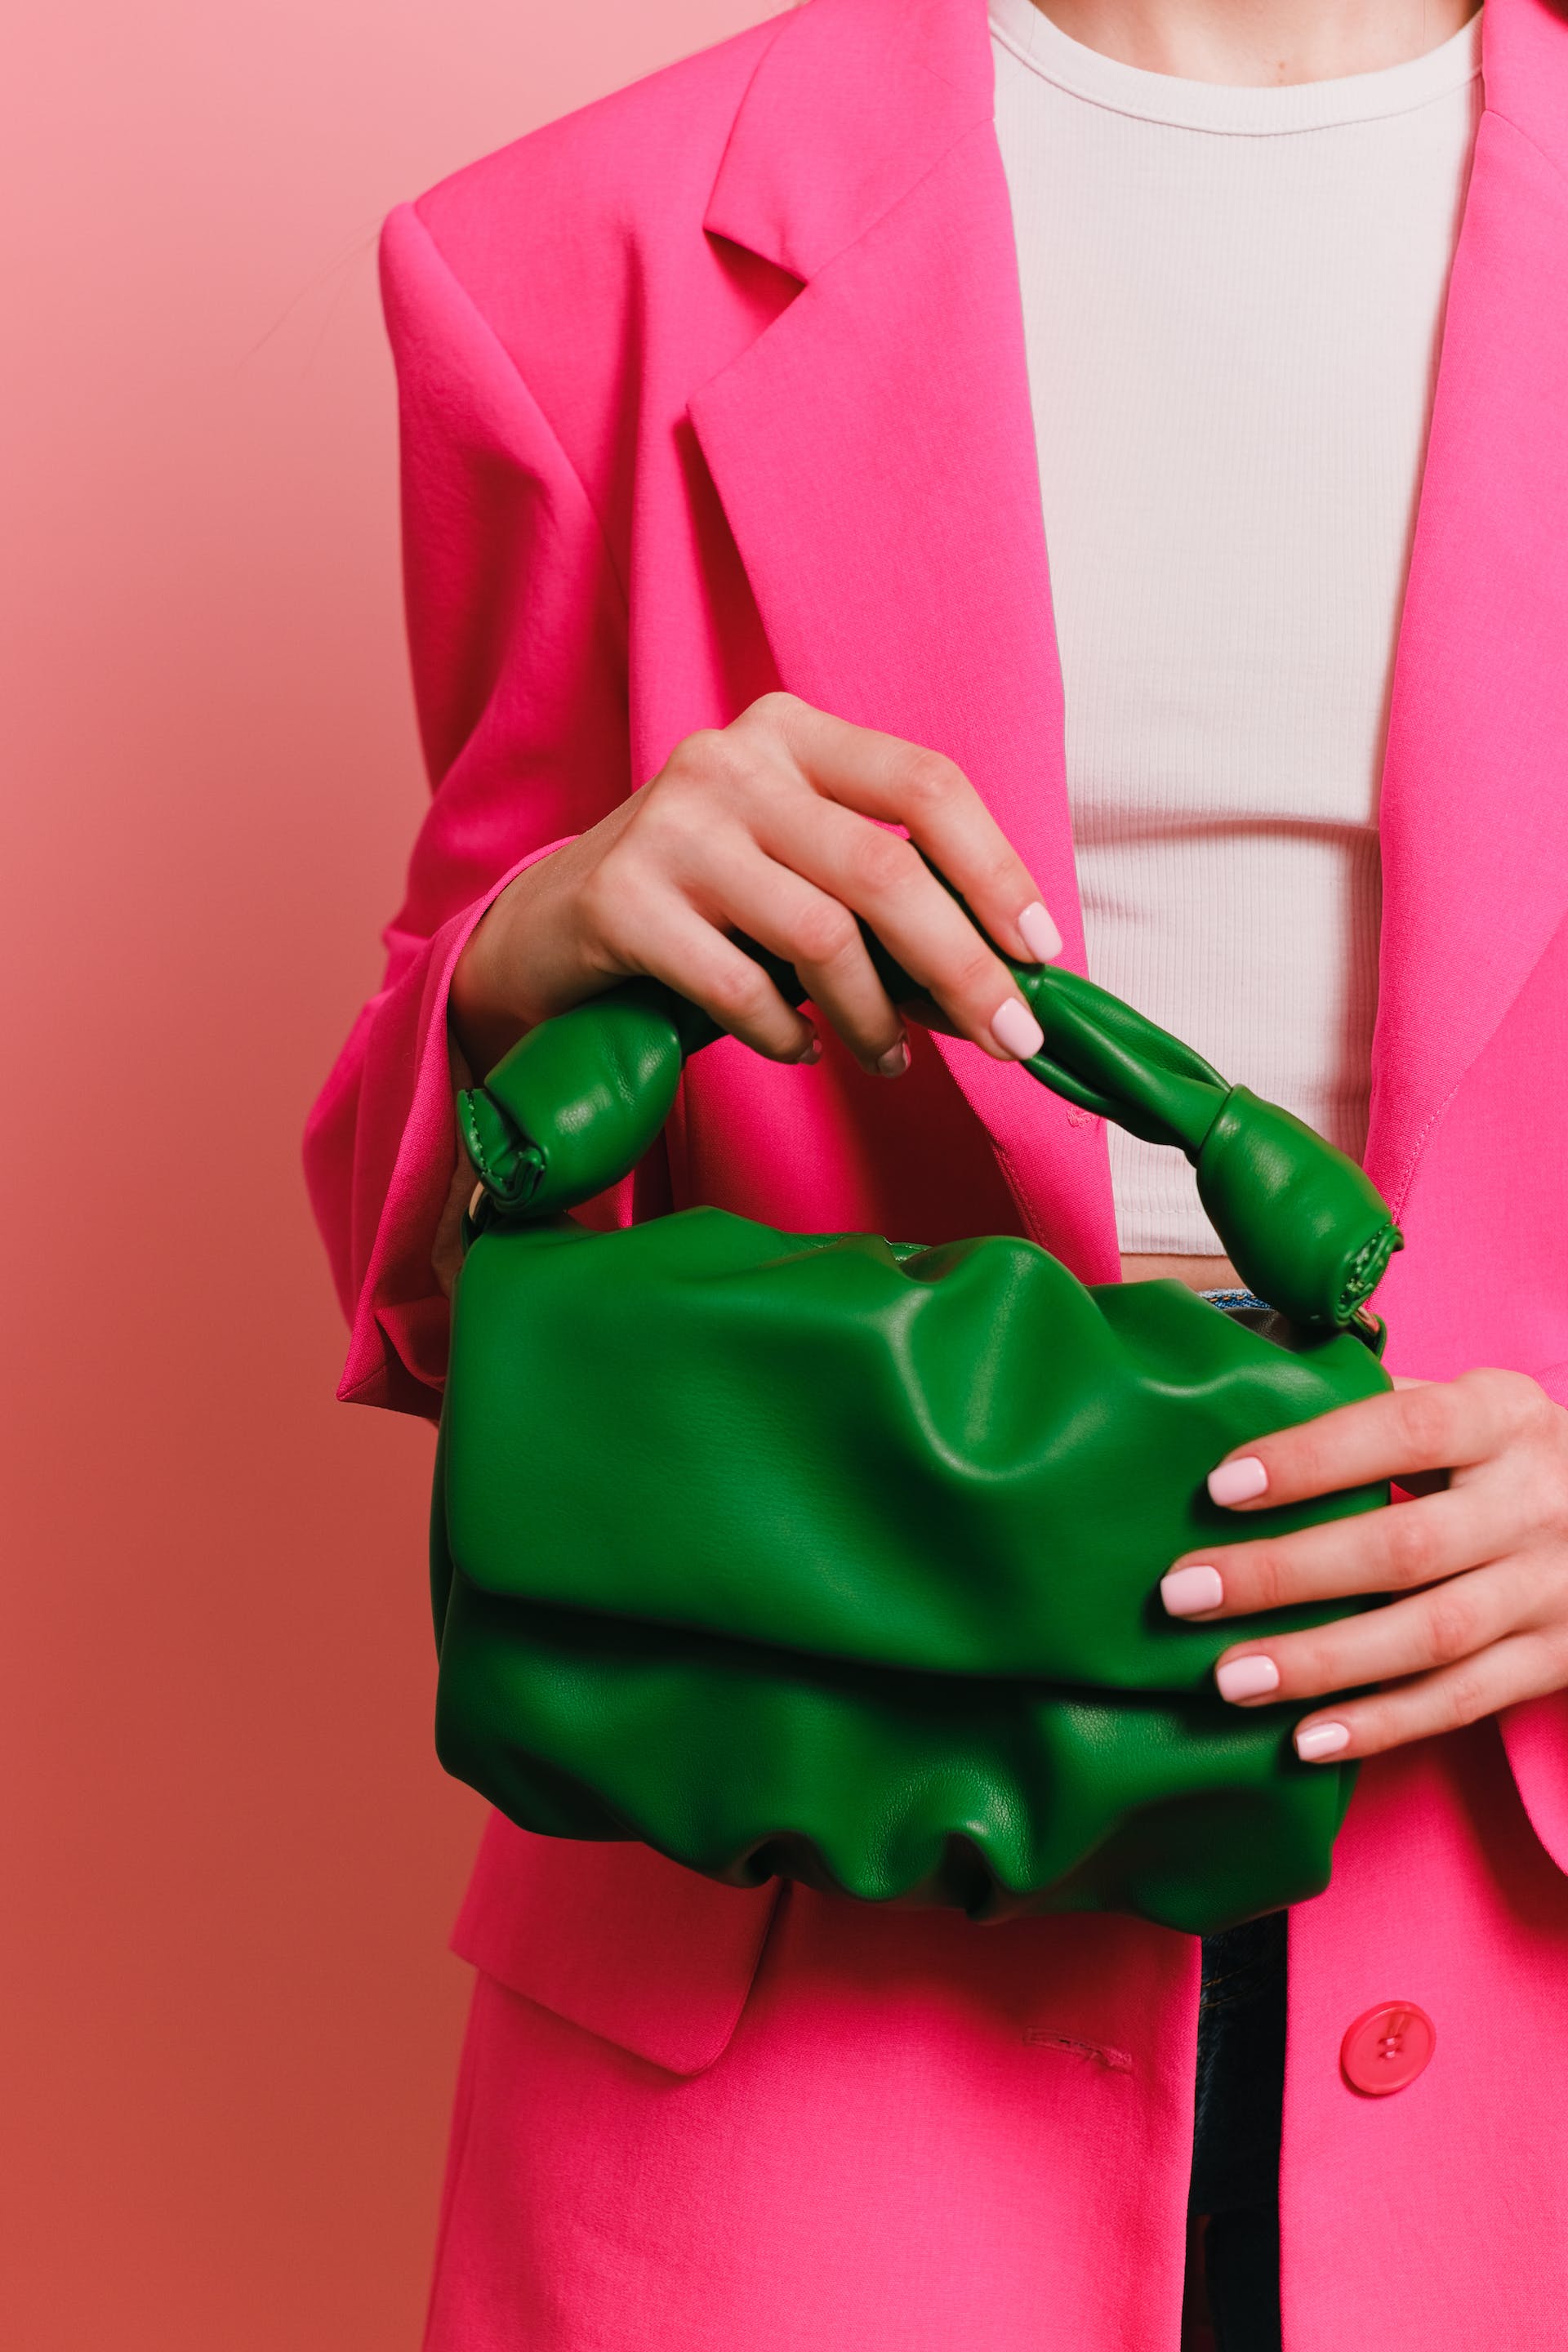 Femme en blazer rose tenant un sac à main vert | Source : Pexels